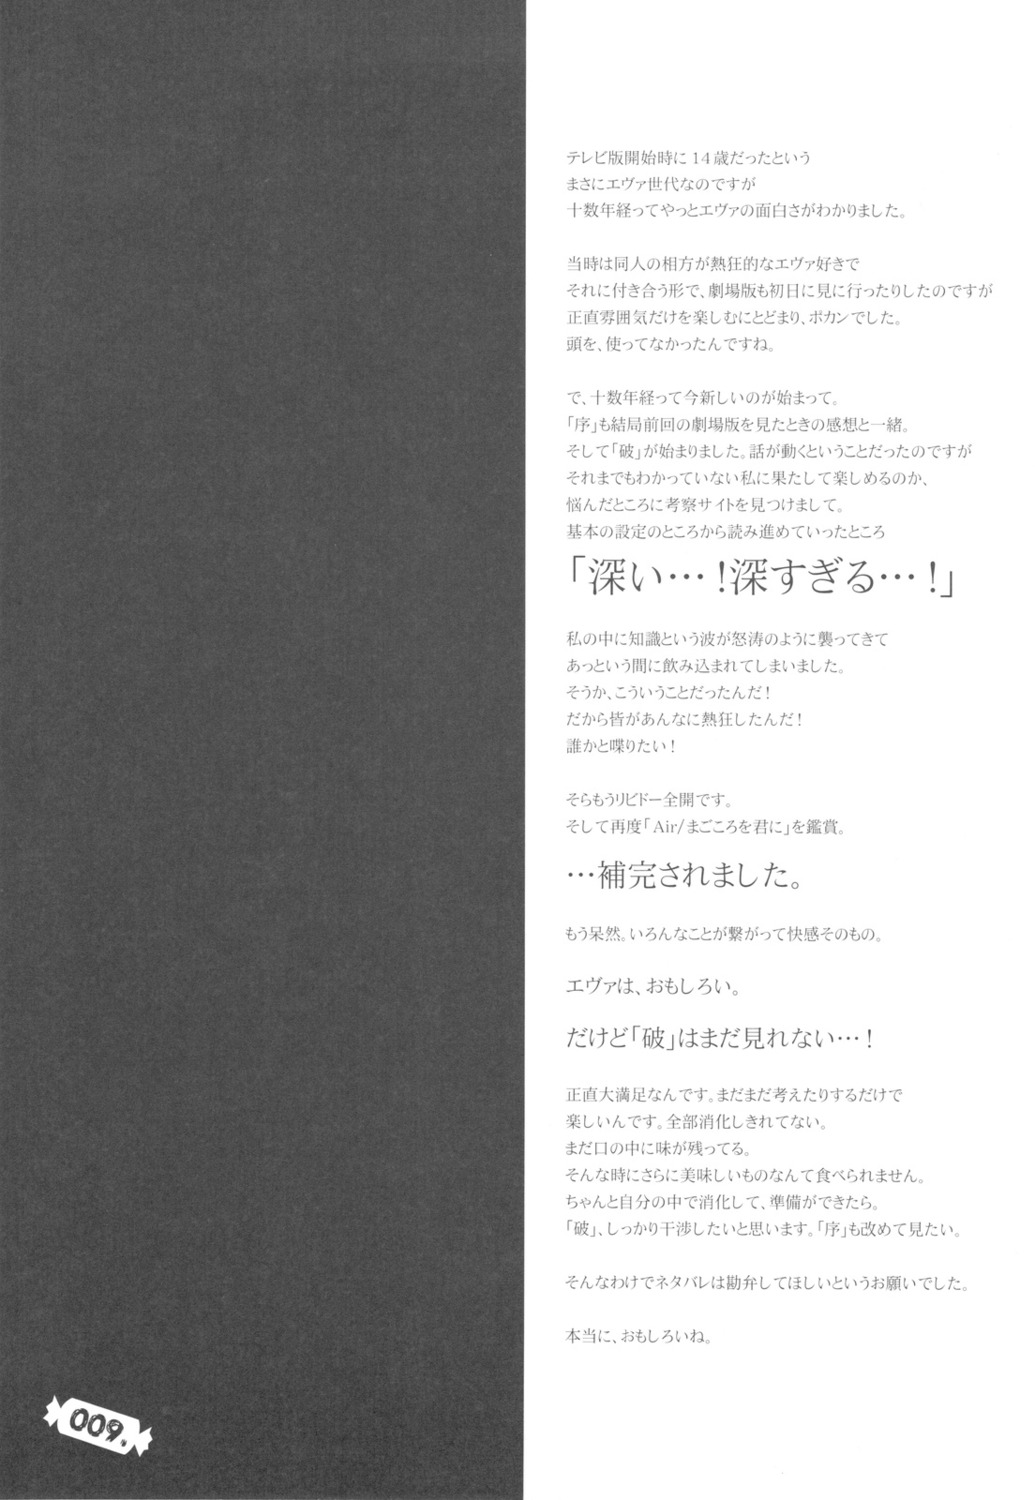 matsuda98 monochrome text